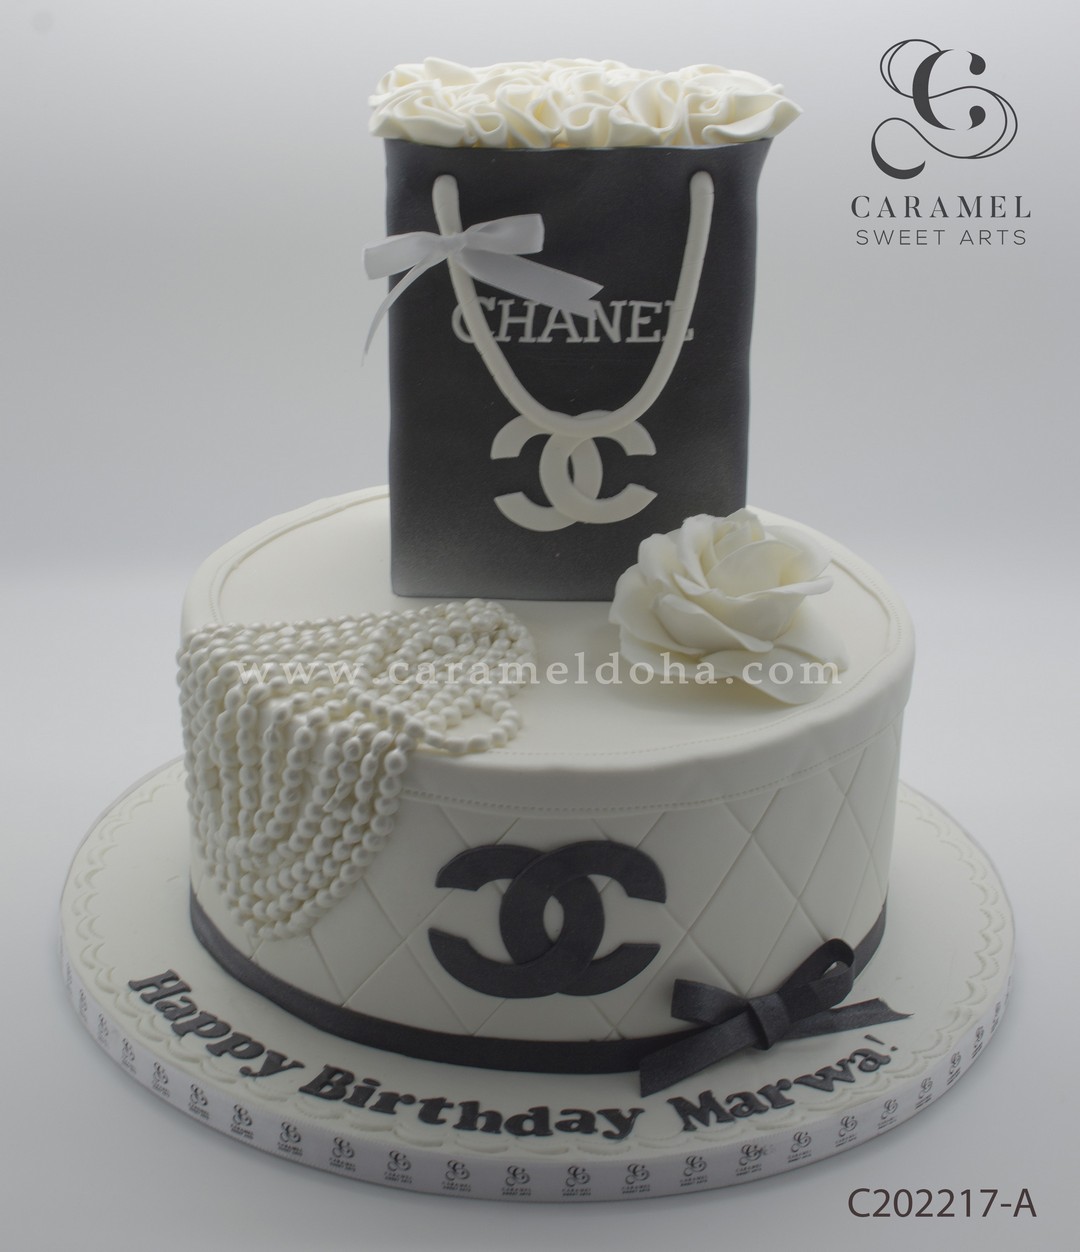 Chanel Cake | Chanel cake, Birthday cakes for women, Cake